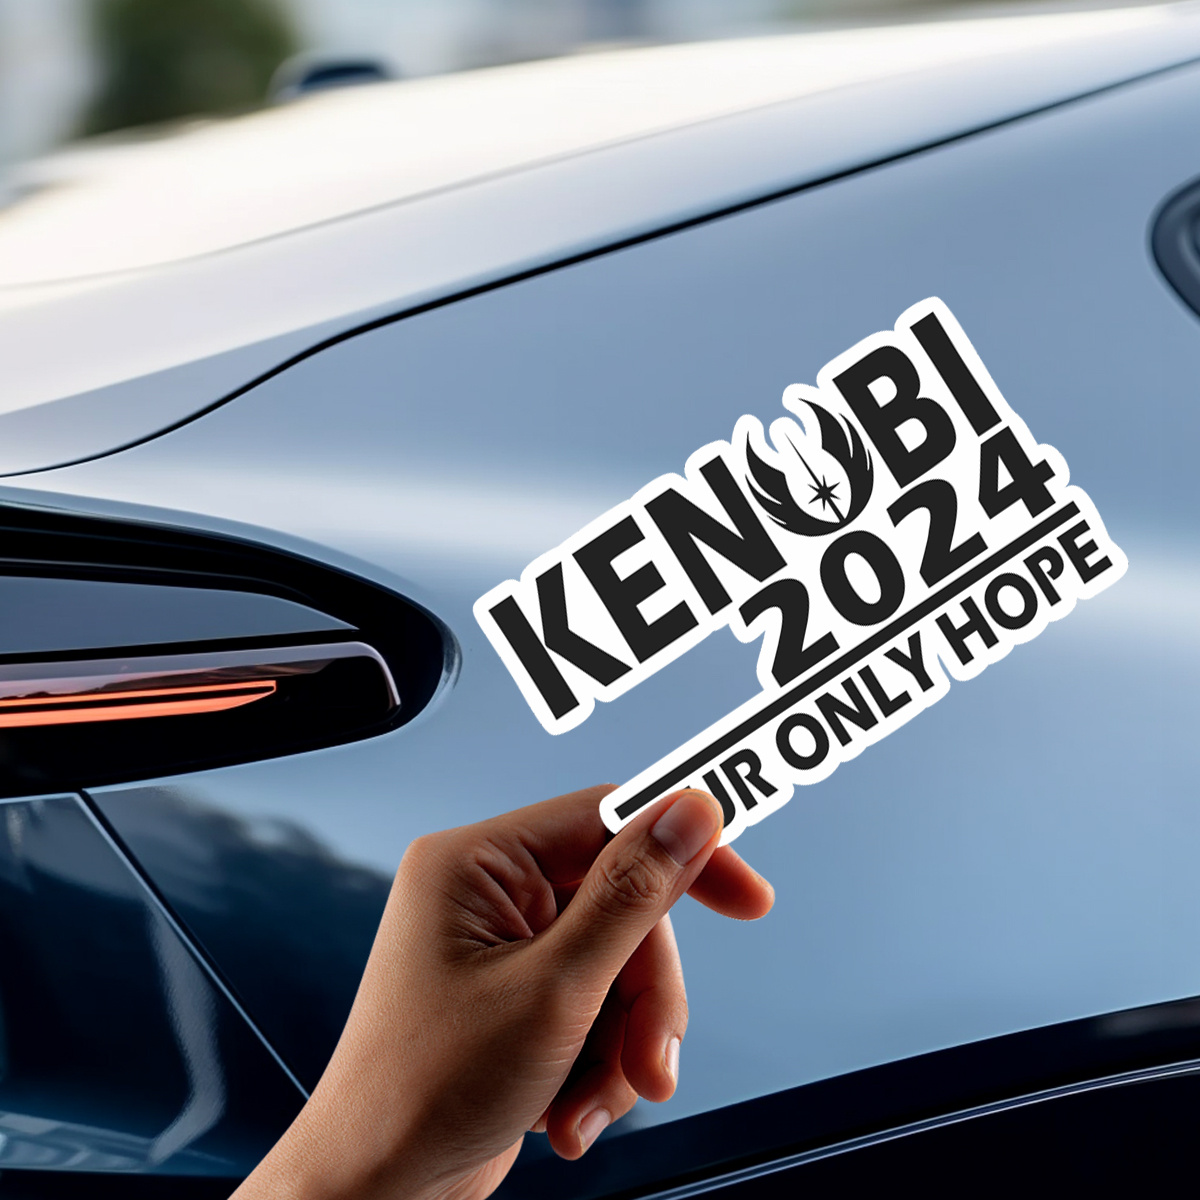 

Kenobi 2024: Our Only Hope Vinyl Decal For Car Windows - Cartoon Design, Self-adhesive, Durable Vinyl